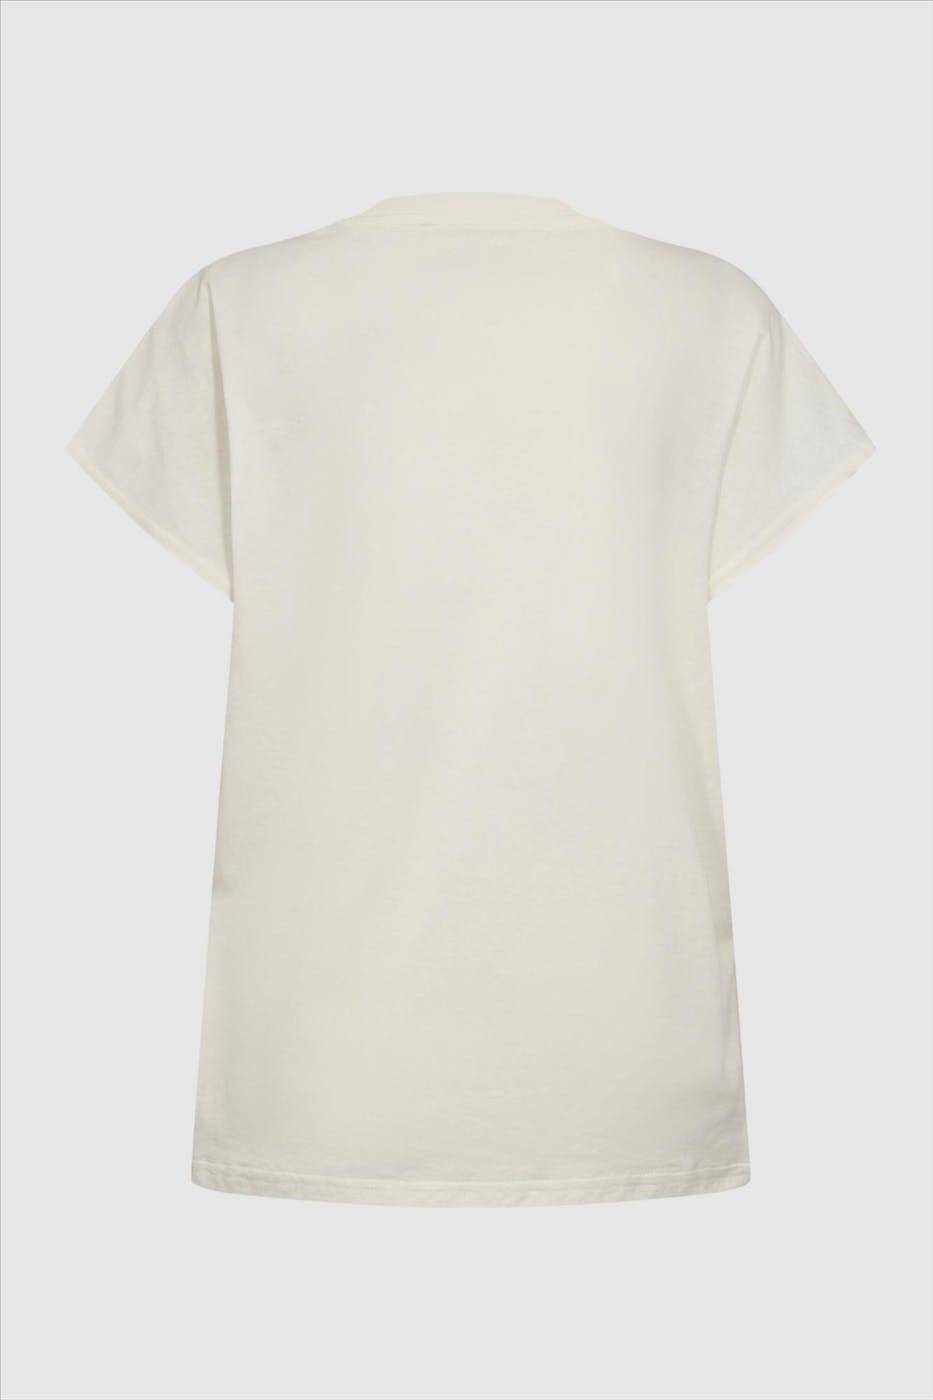 Minimum - Ecru Toves T-shirt